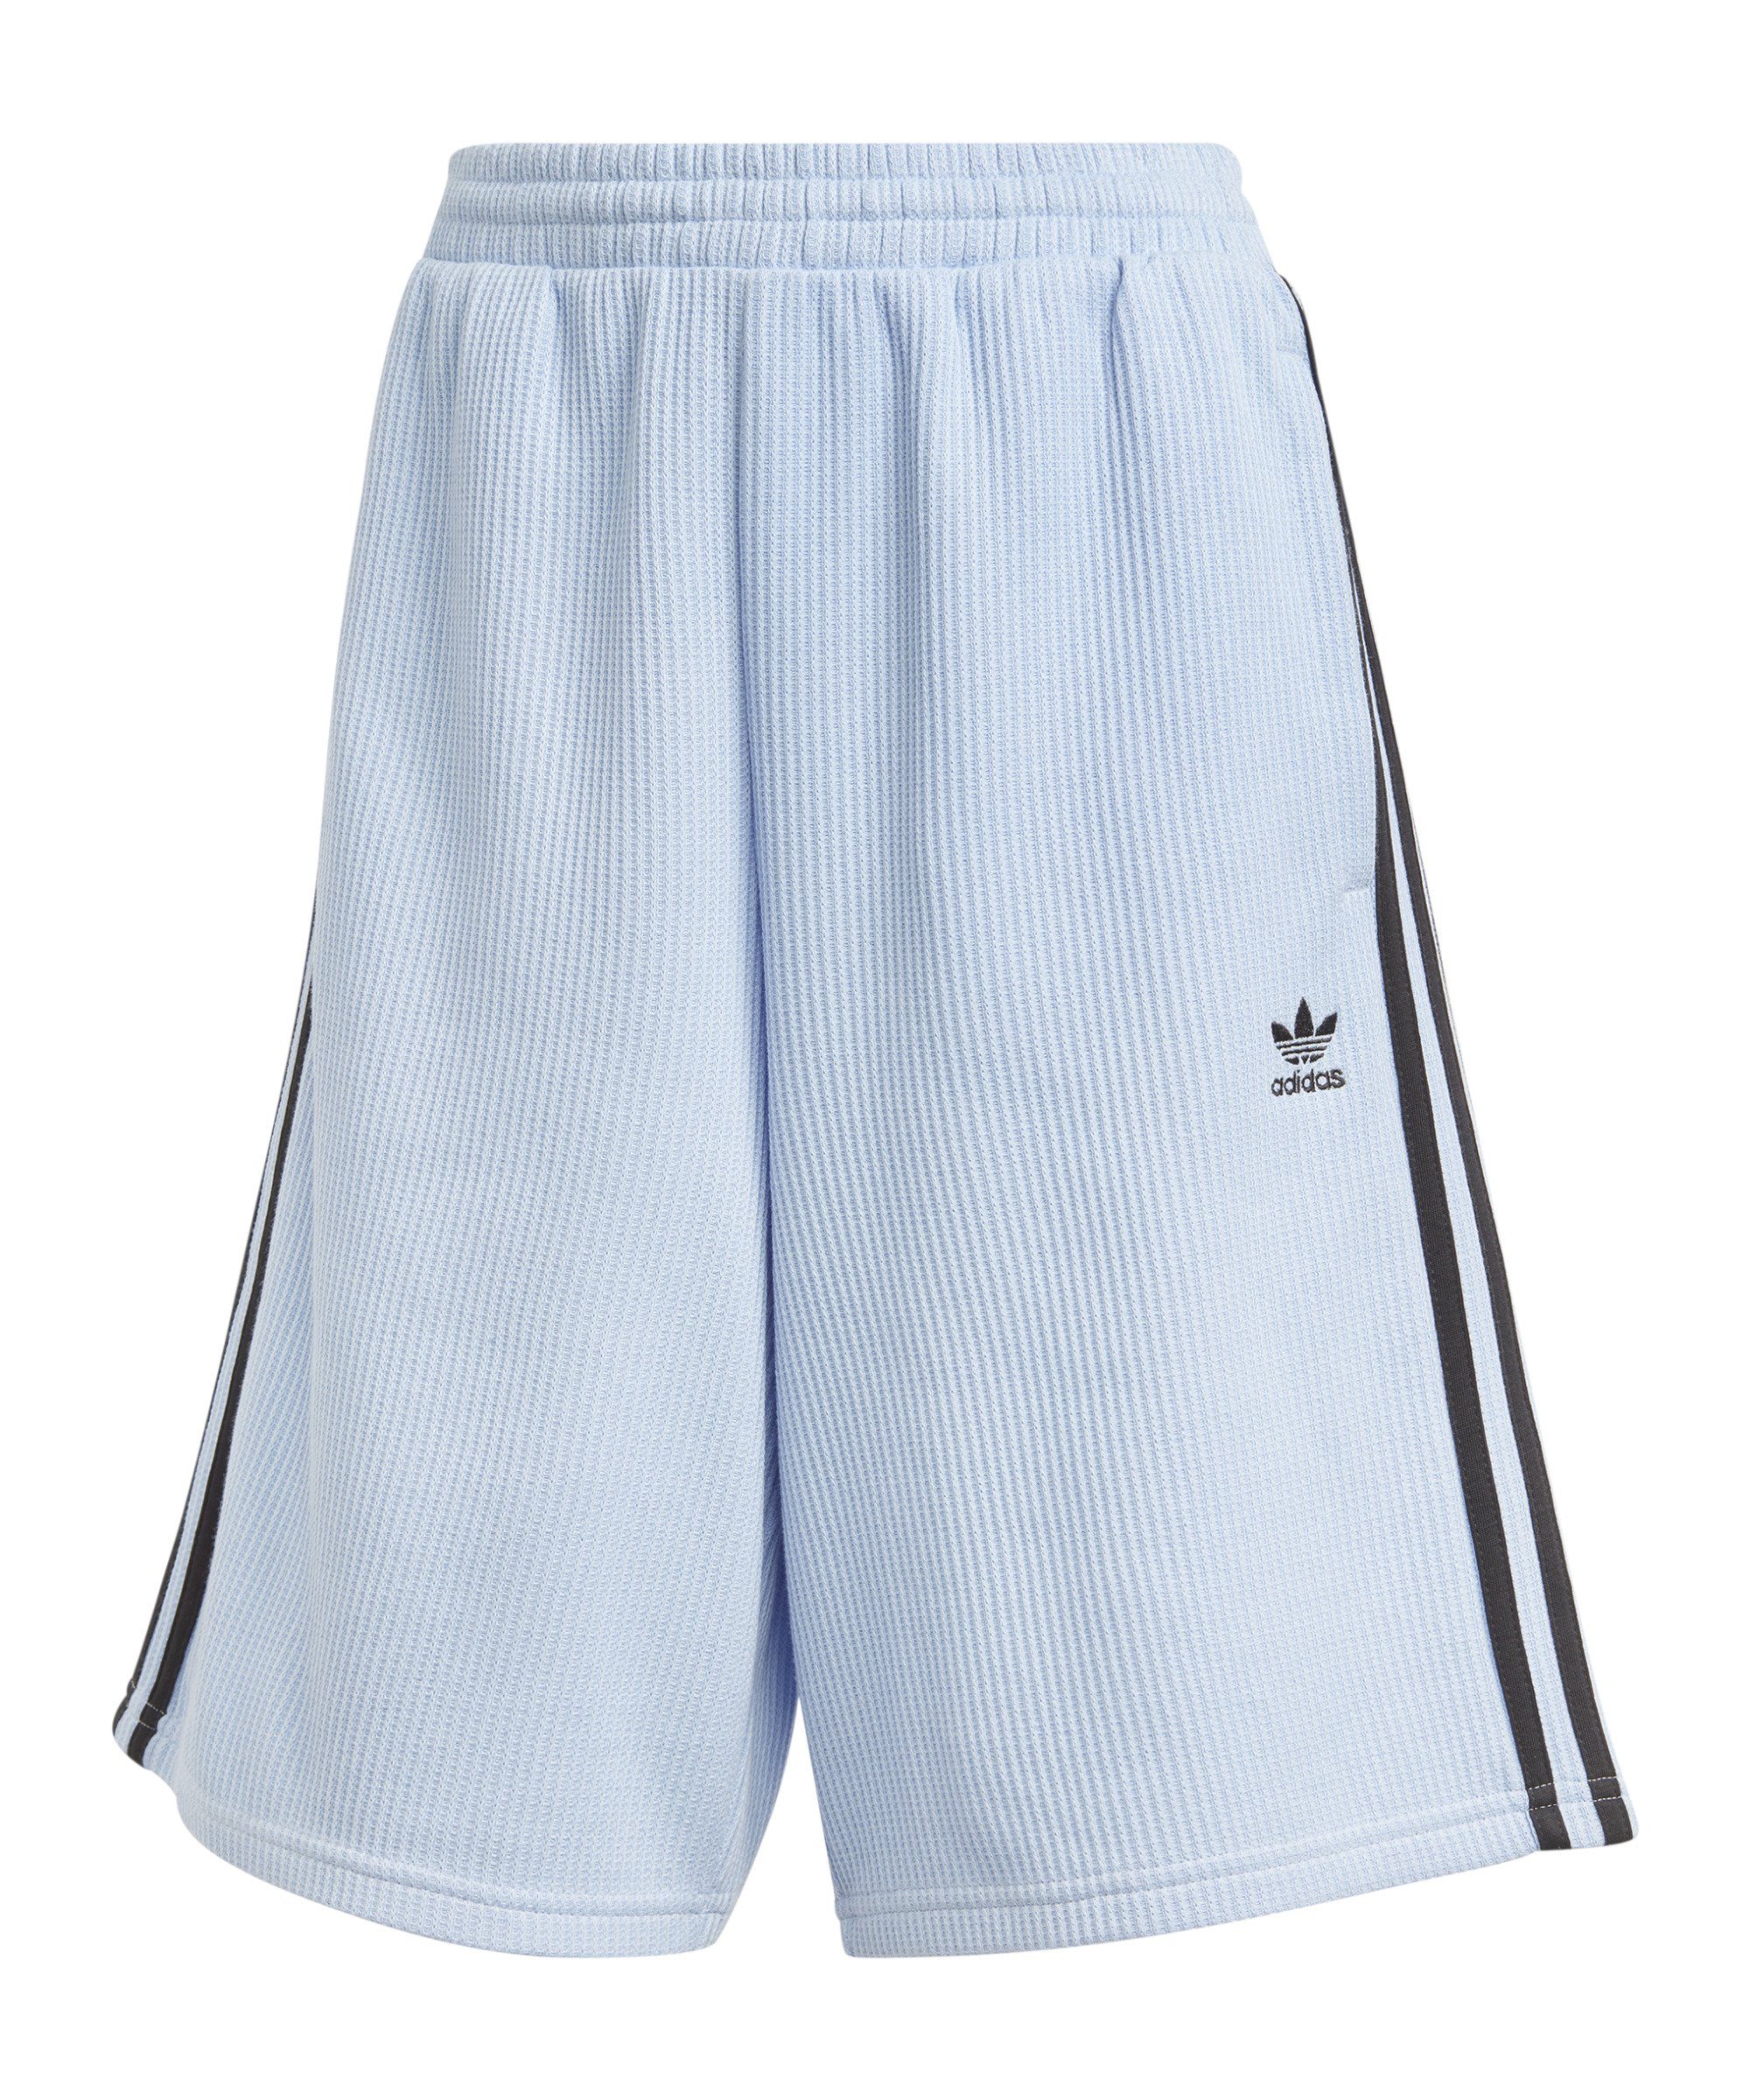 adidas Originals Jogginghose Bermuda Short Damen blau